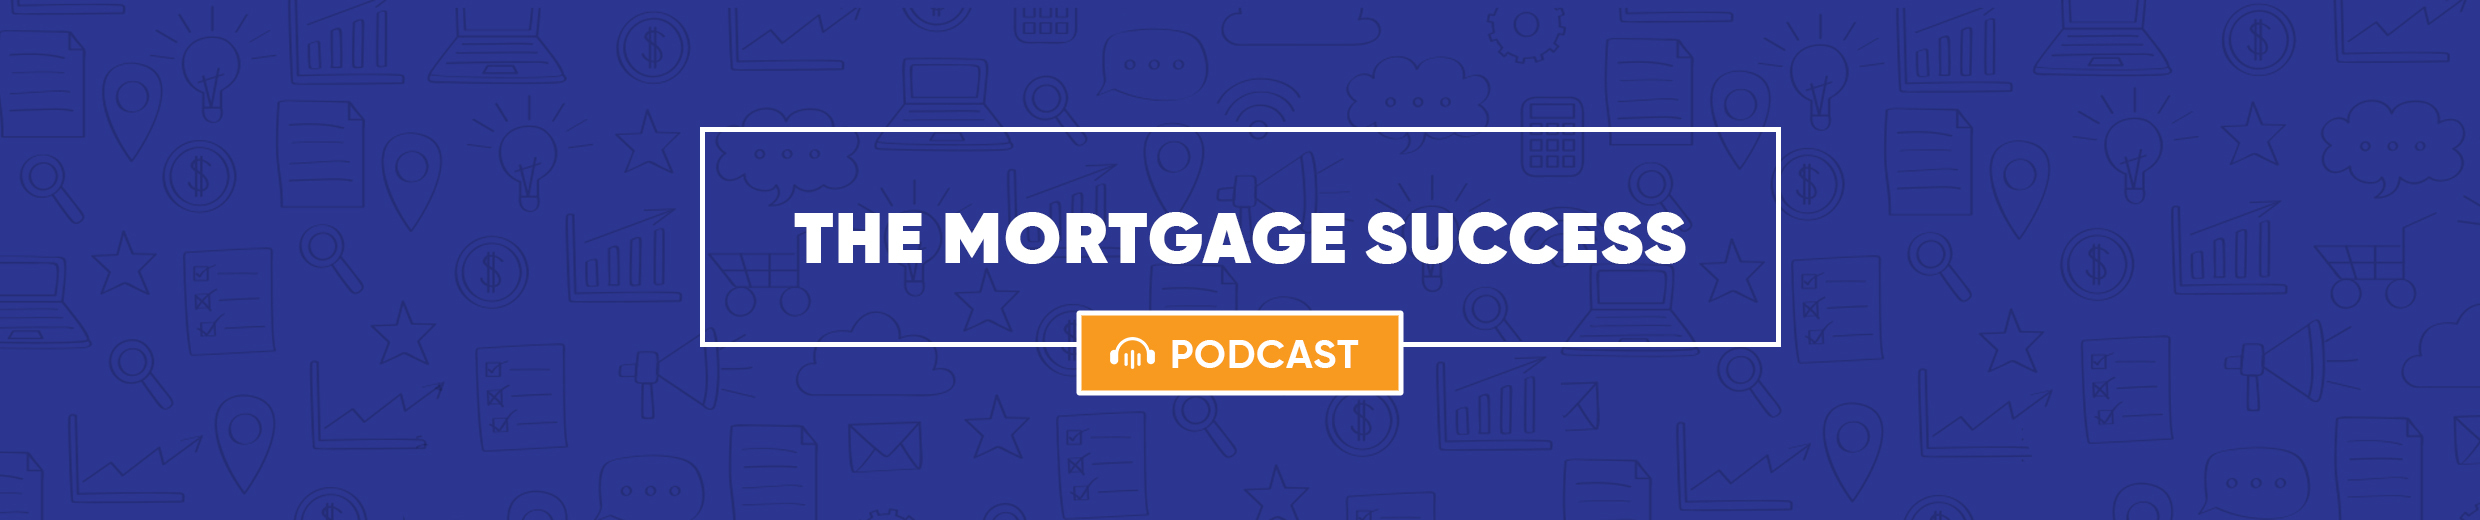 Mortgage Success Podcast Mortgage Broker Marketing